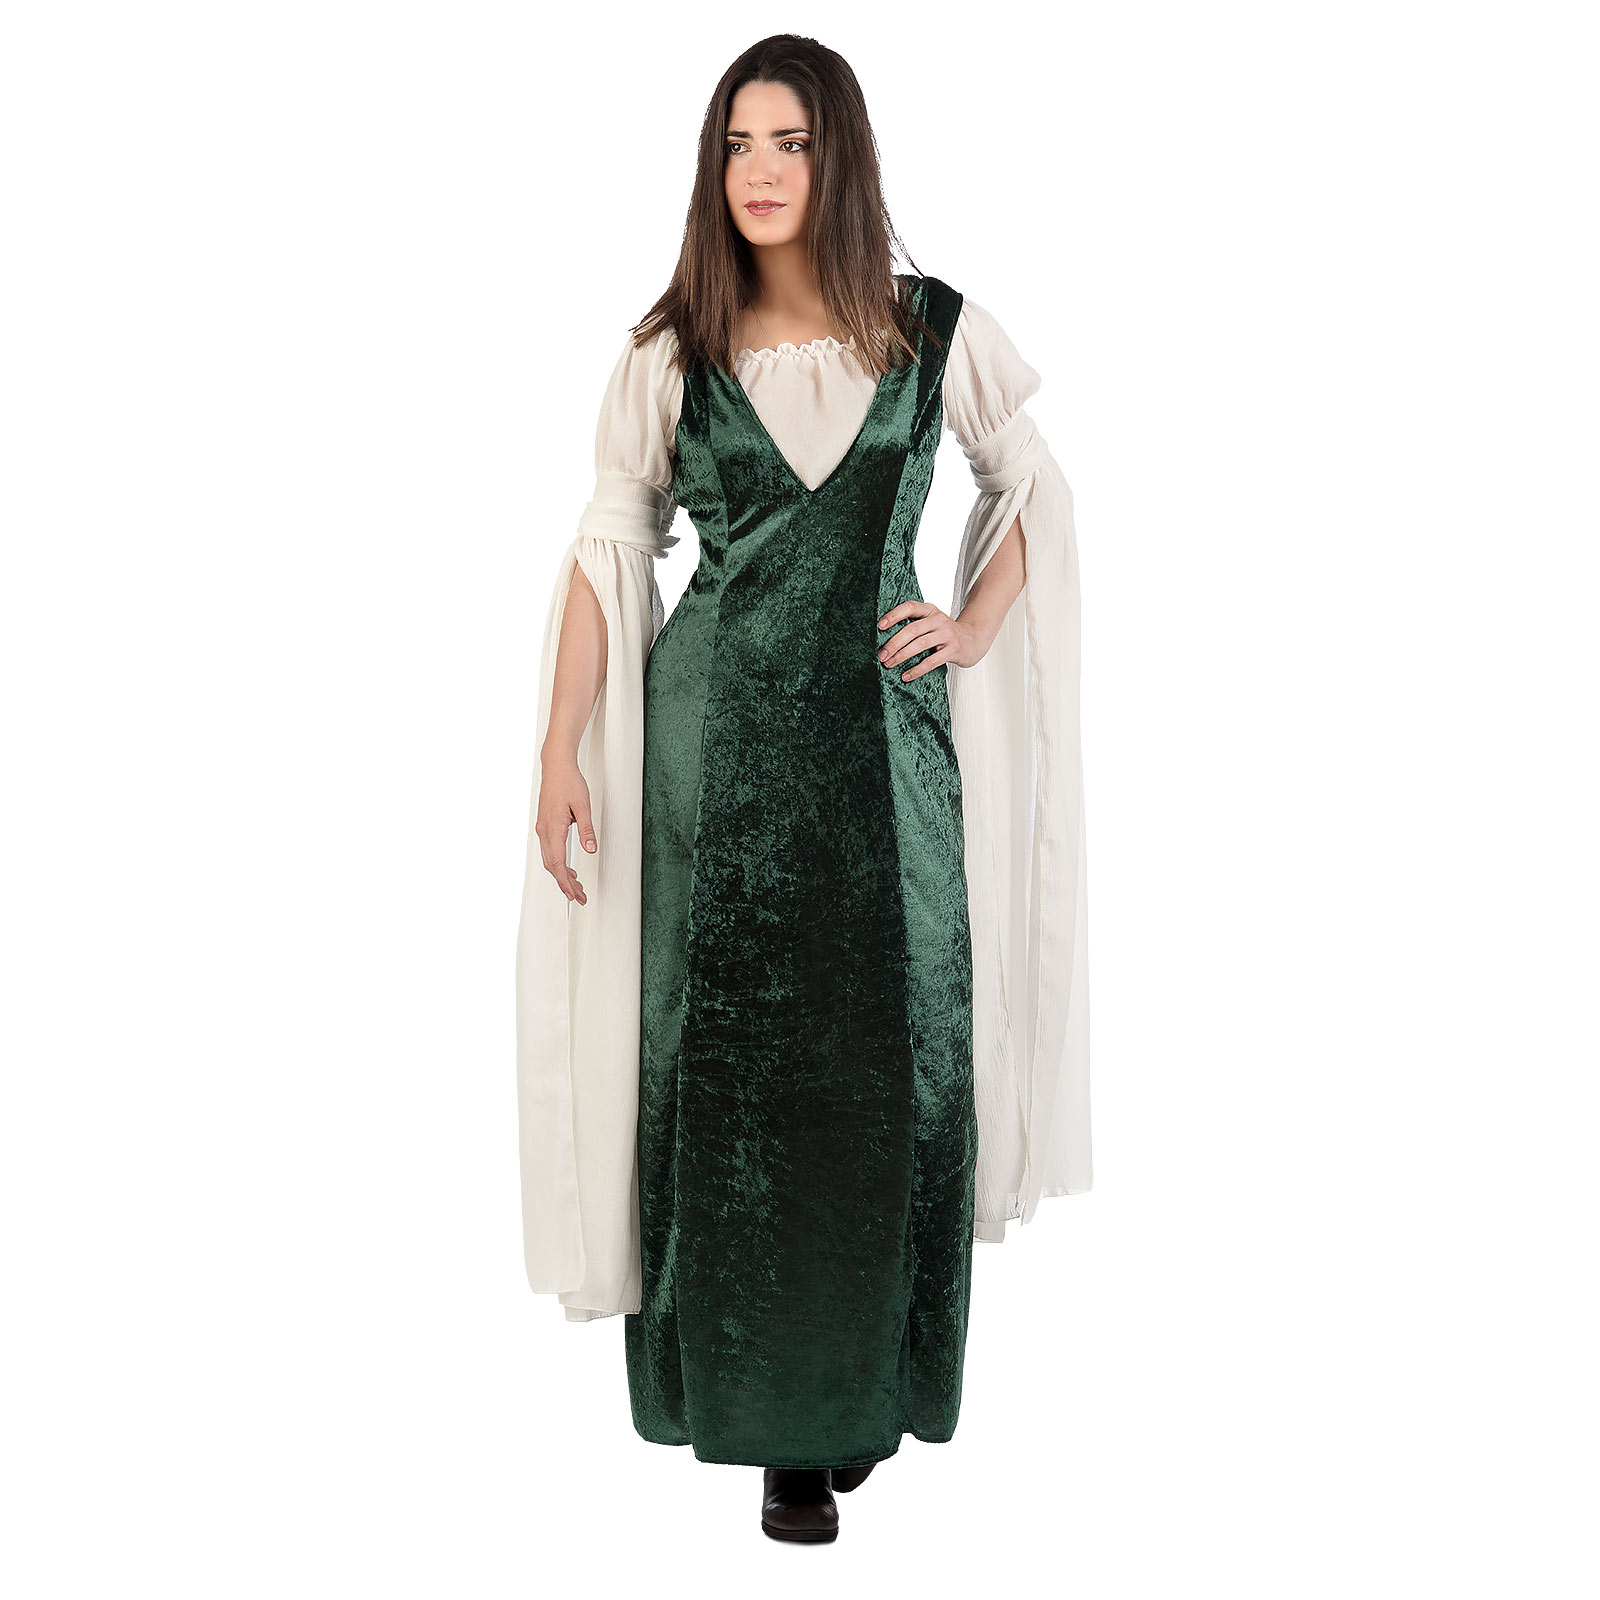 Mittelalter Samt Kleid Kostüm Damen grün